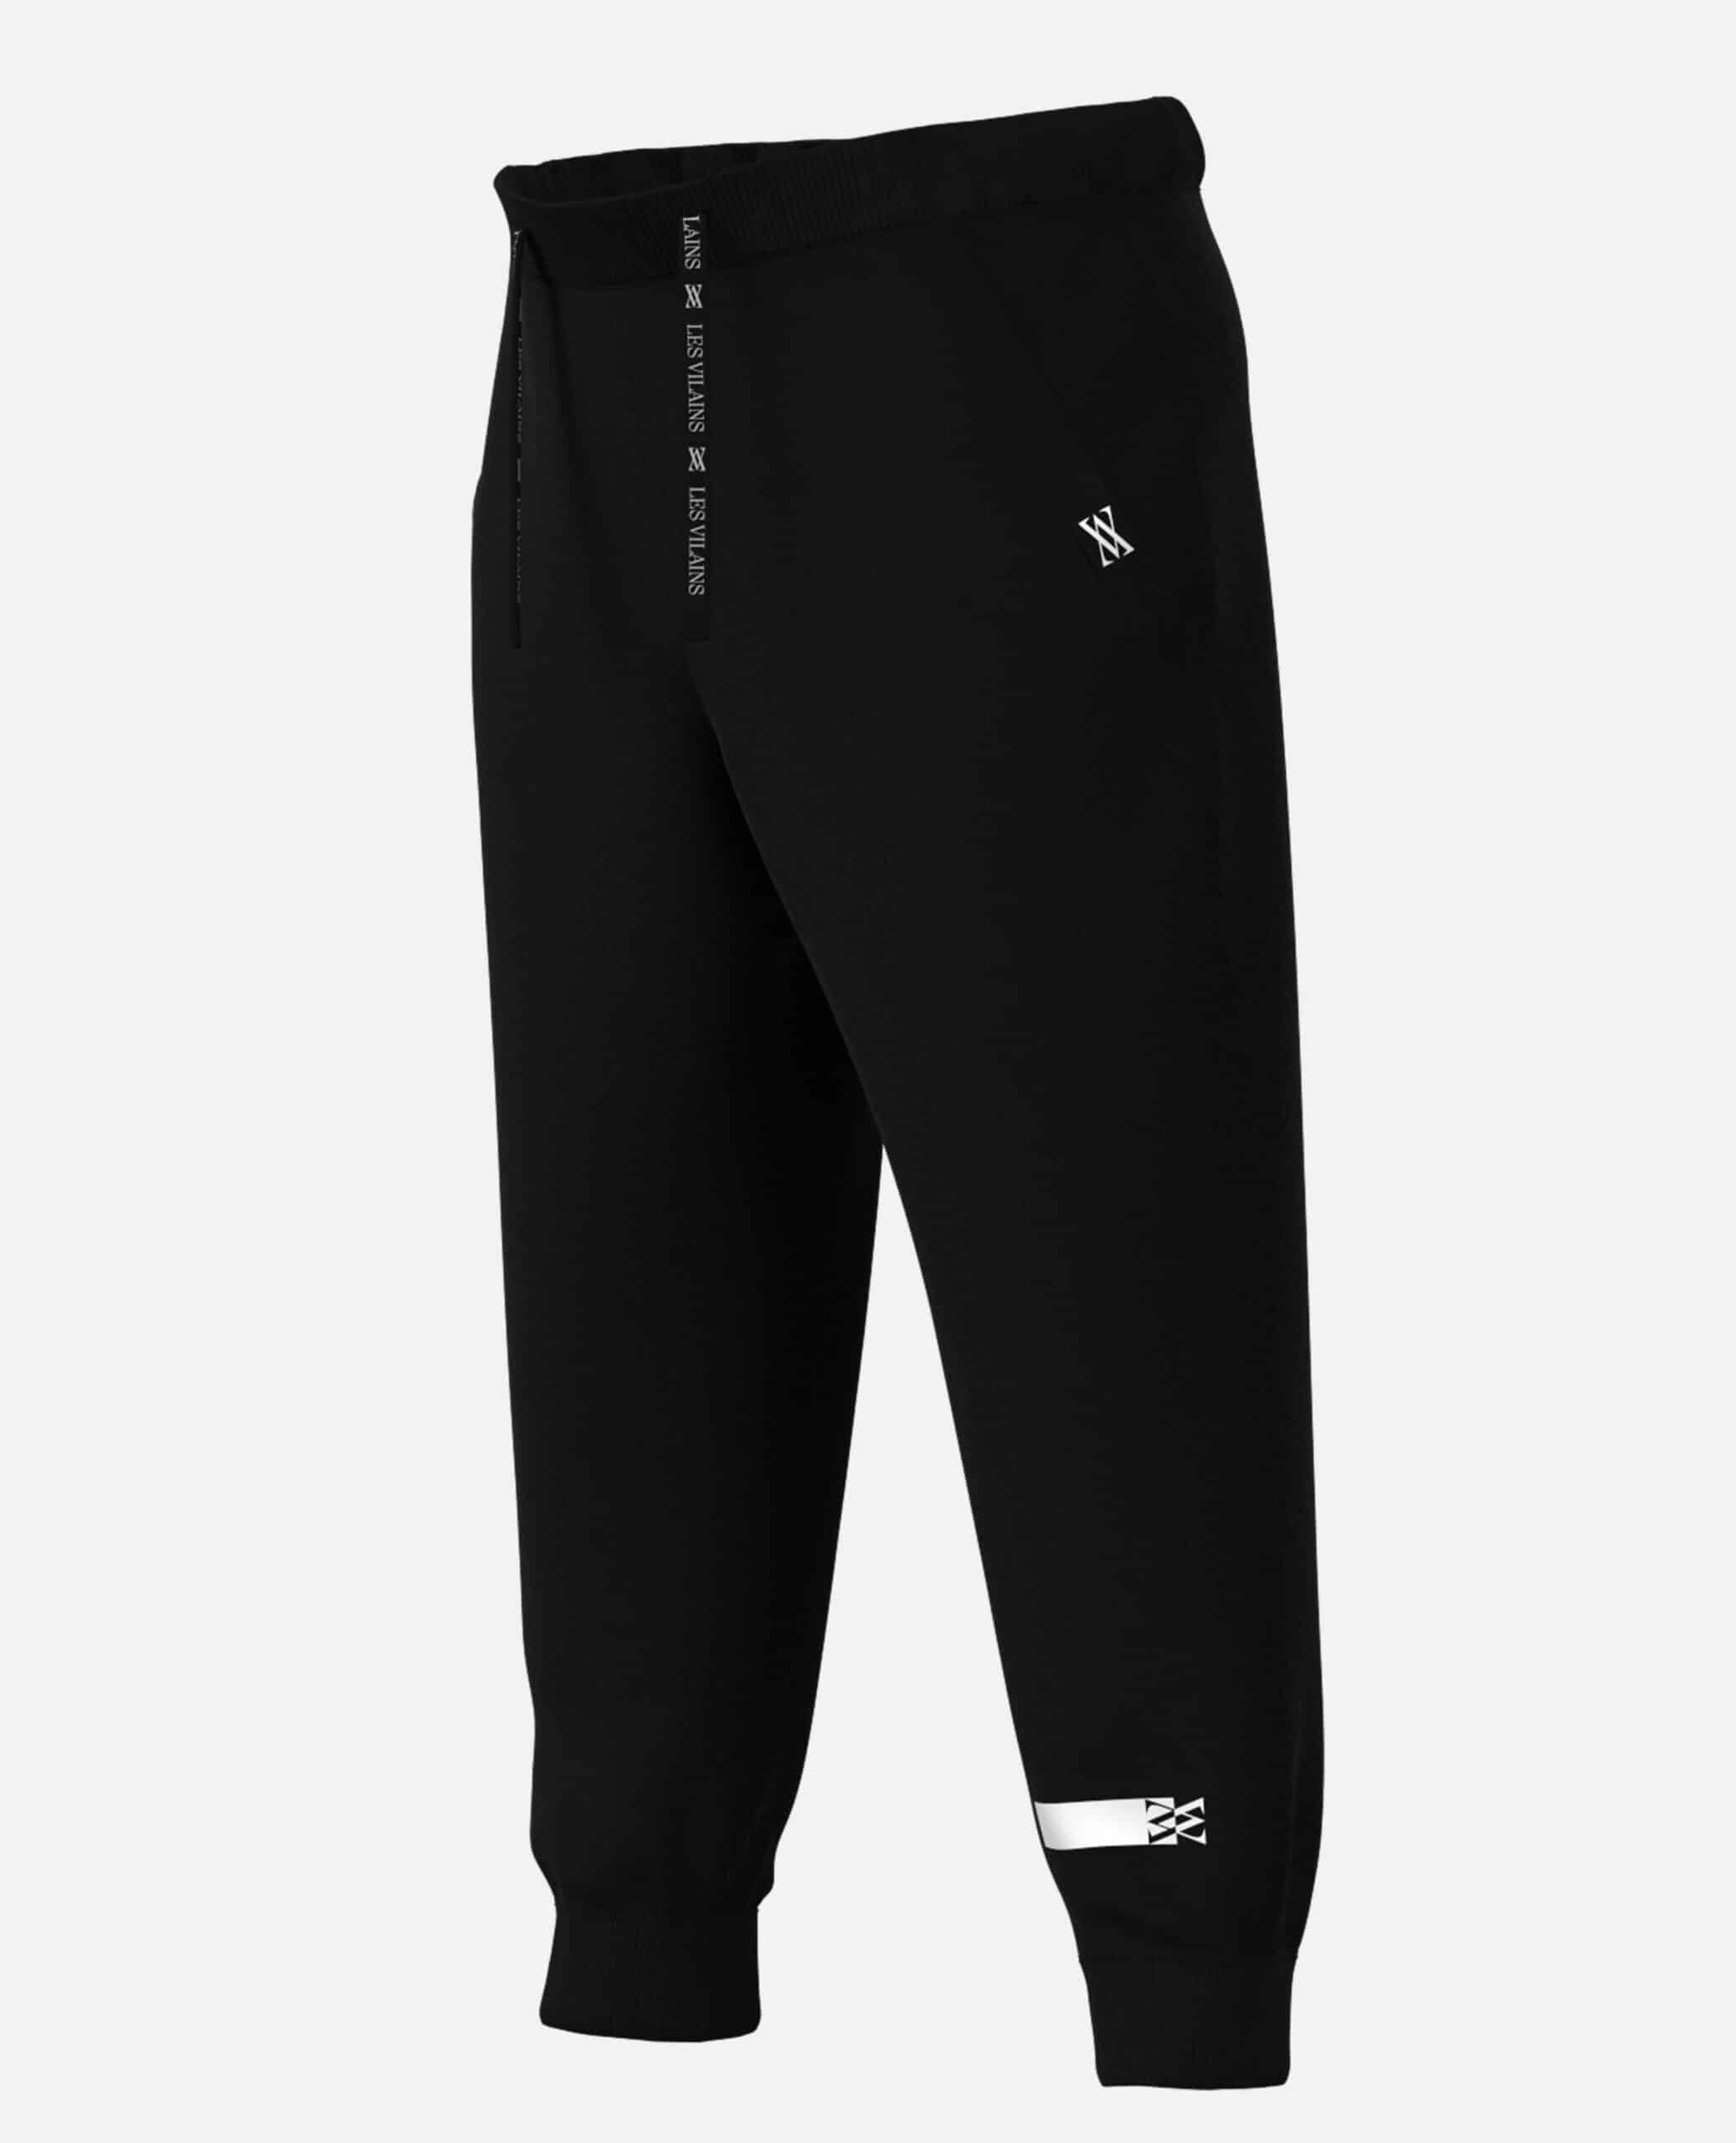 Les Vilains Original Streetwear sweatpants black cross